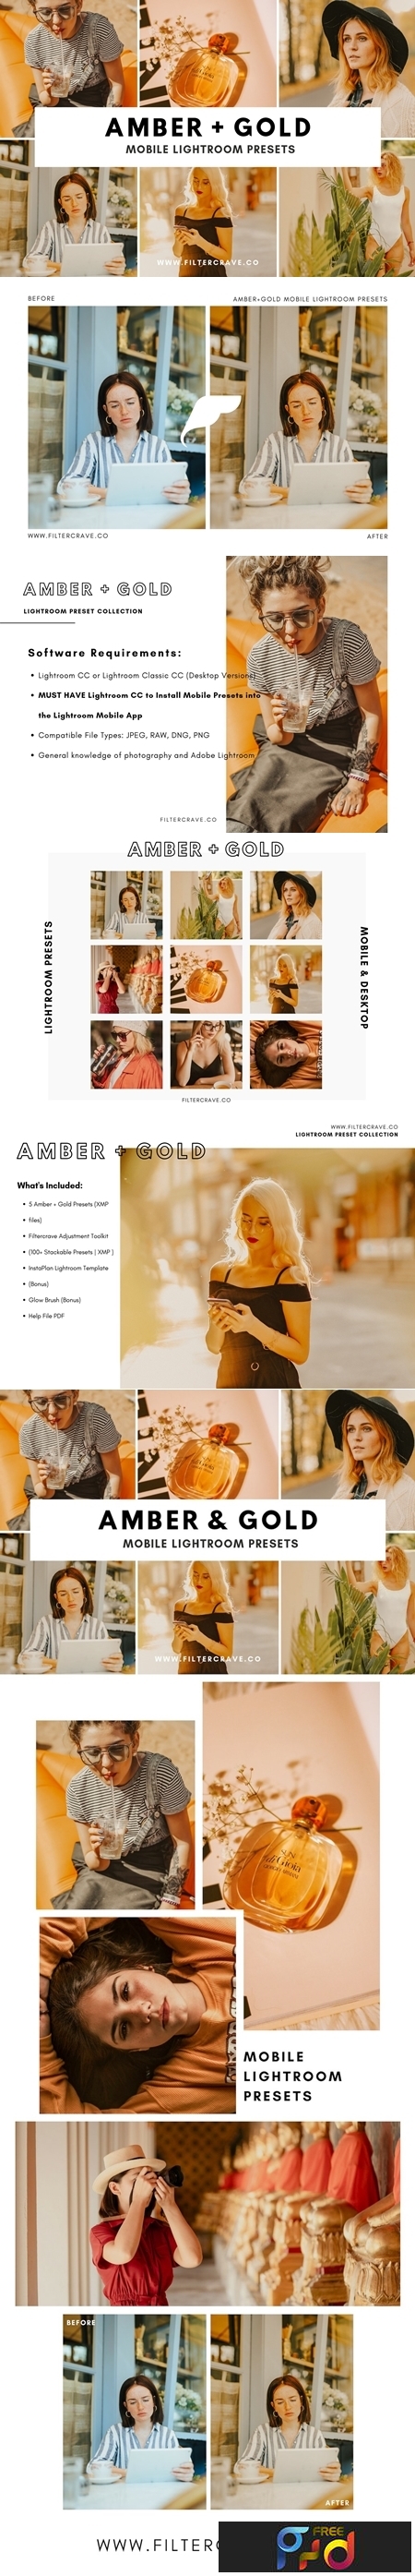 Amber + Gold Mobile Presets